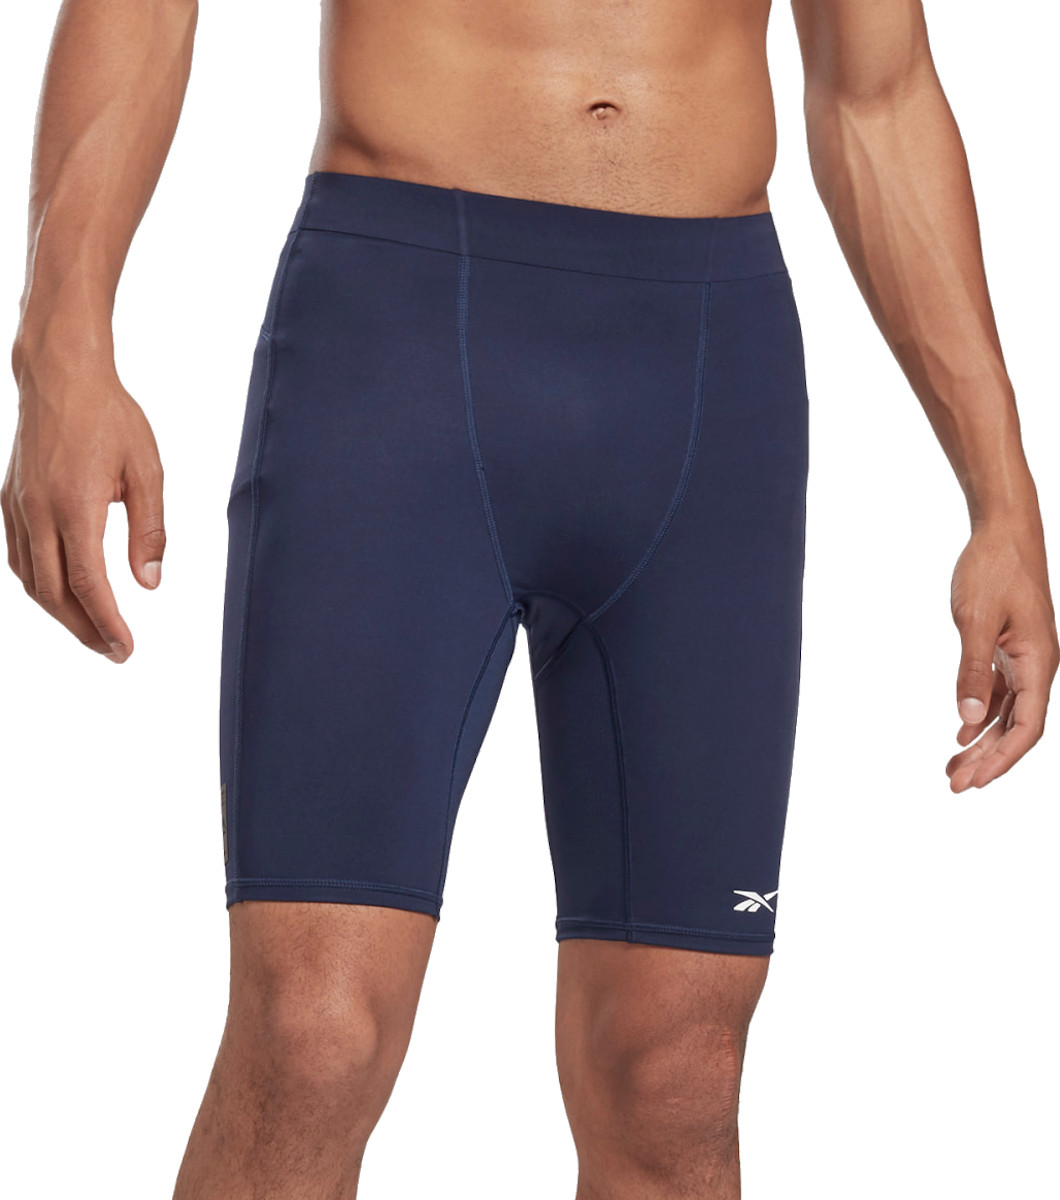 reebok compression shorts